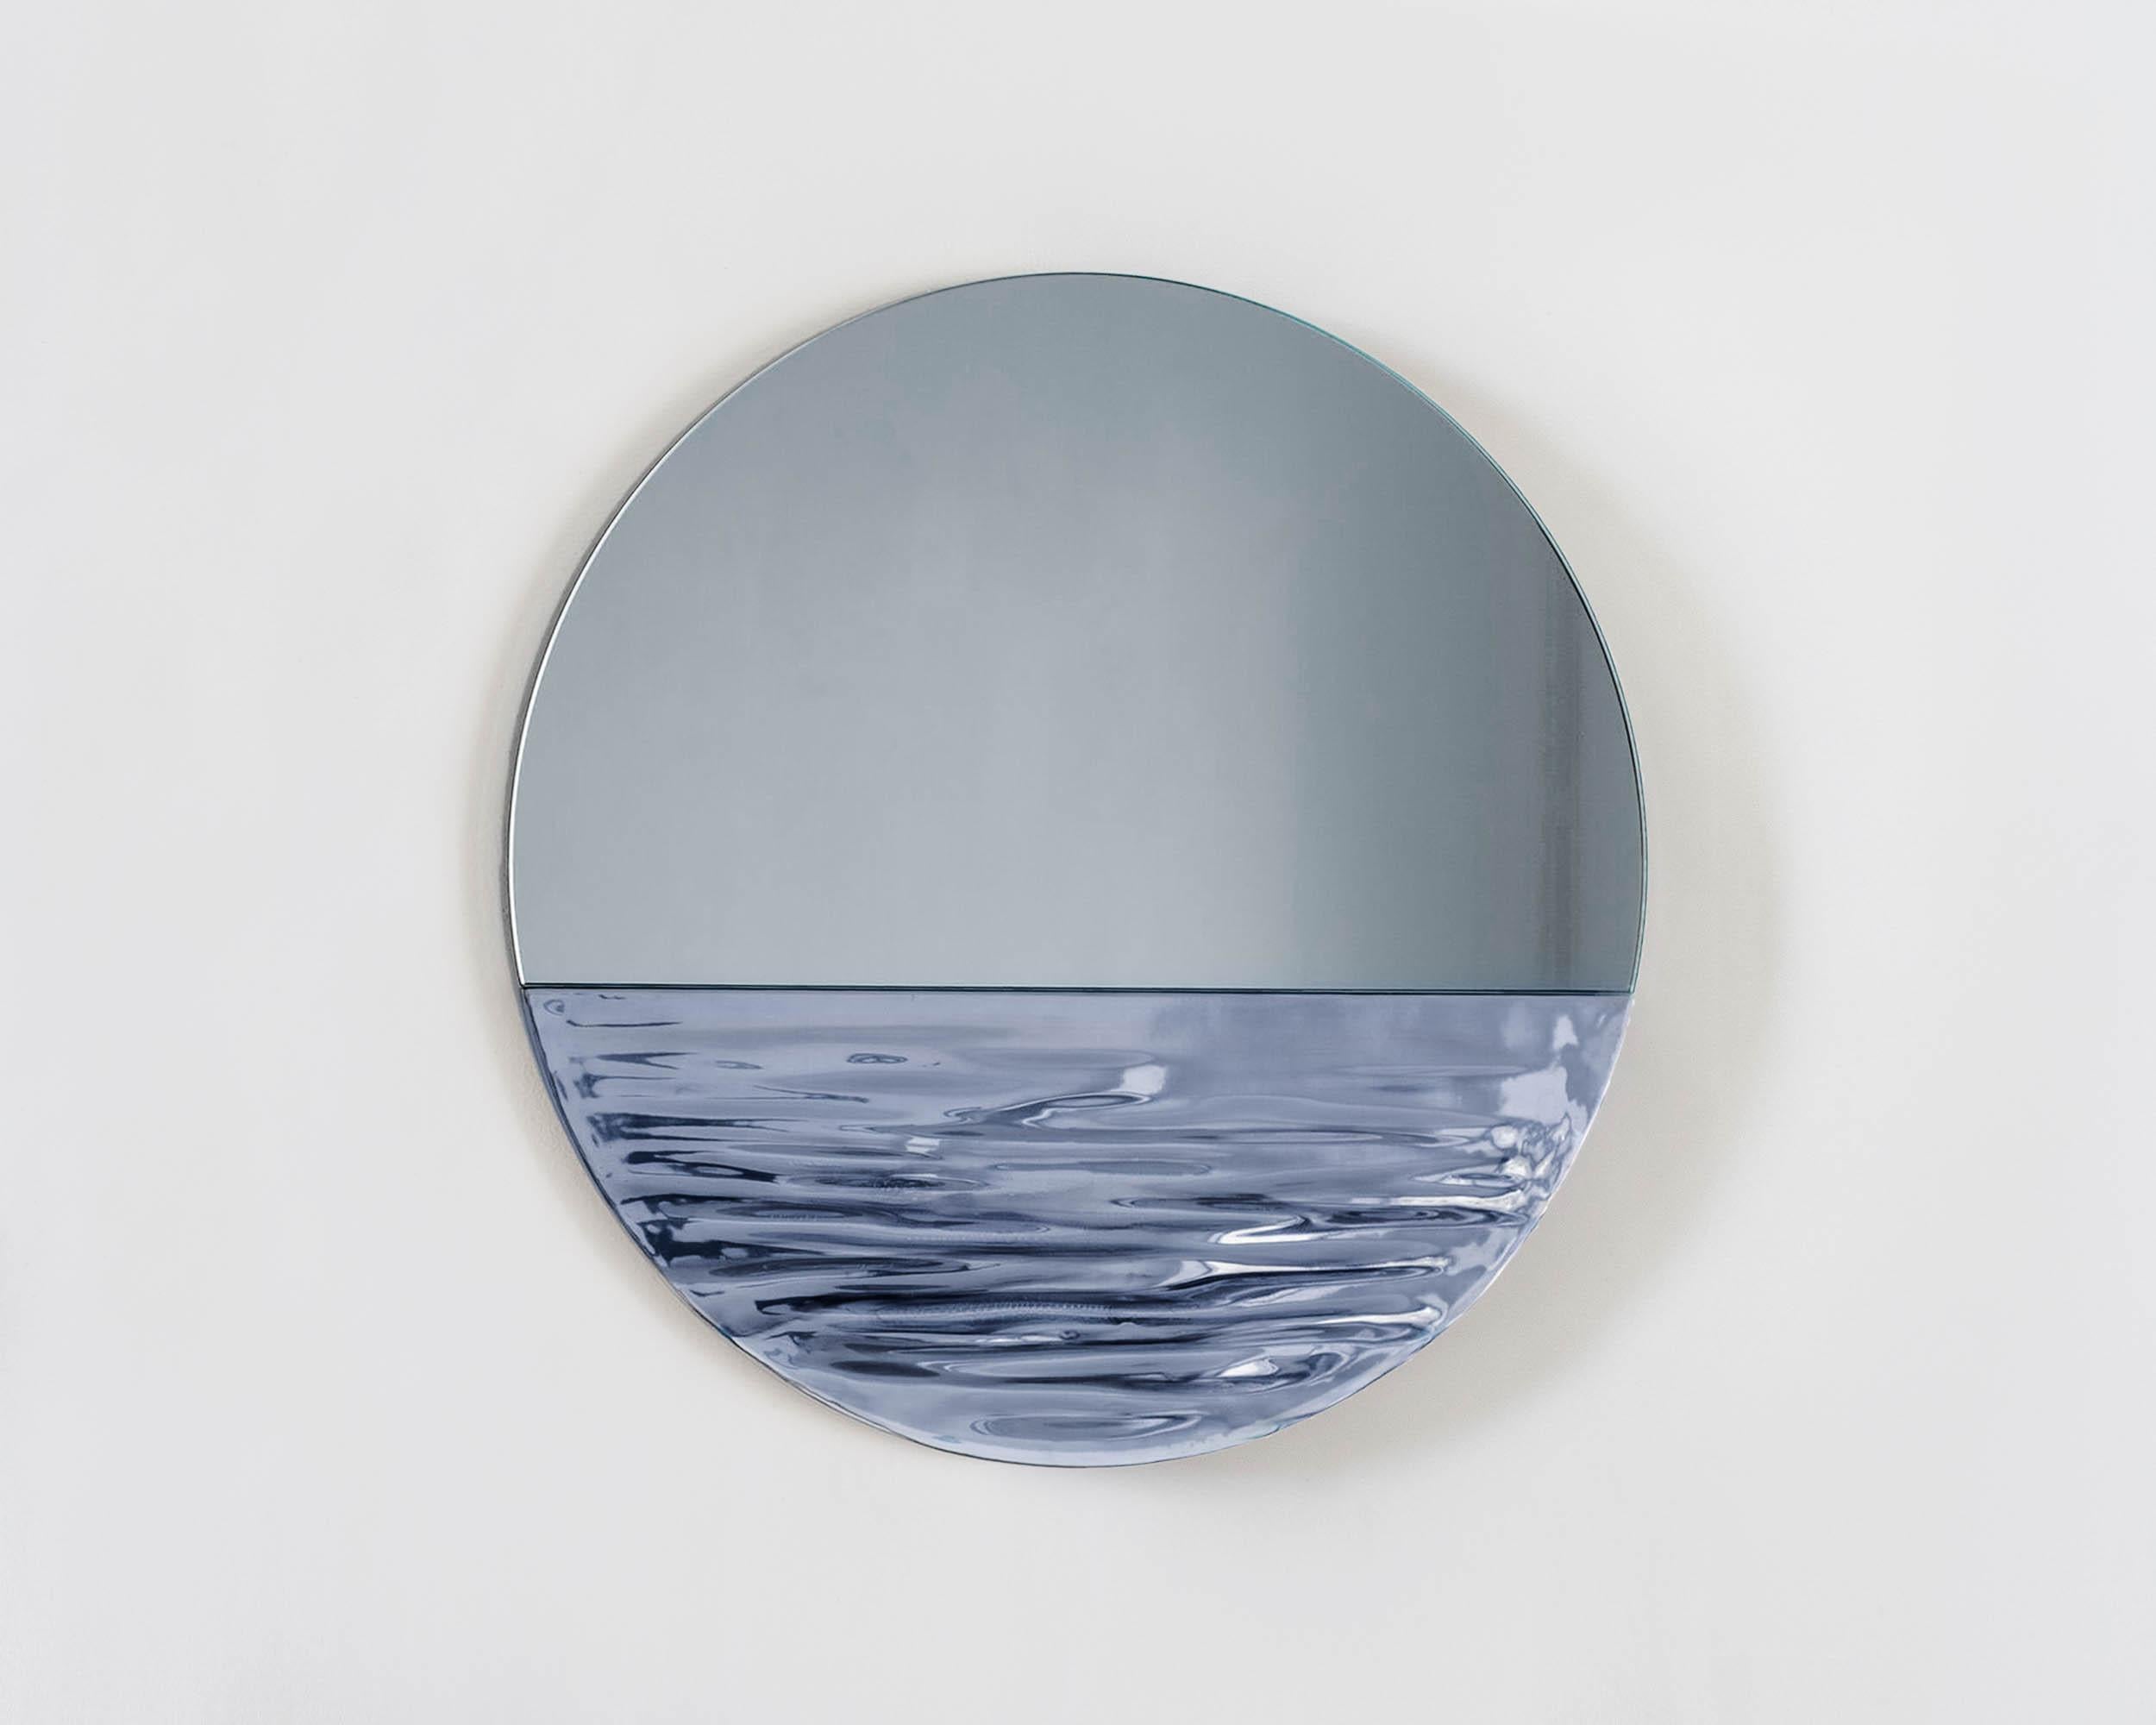 Organique Miroir rond contemporainorizon Midnight Blue d'Ocrm « Céramique » en vente